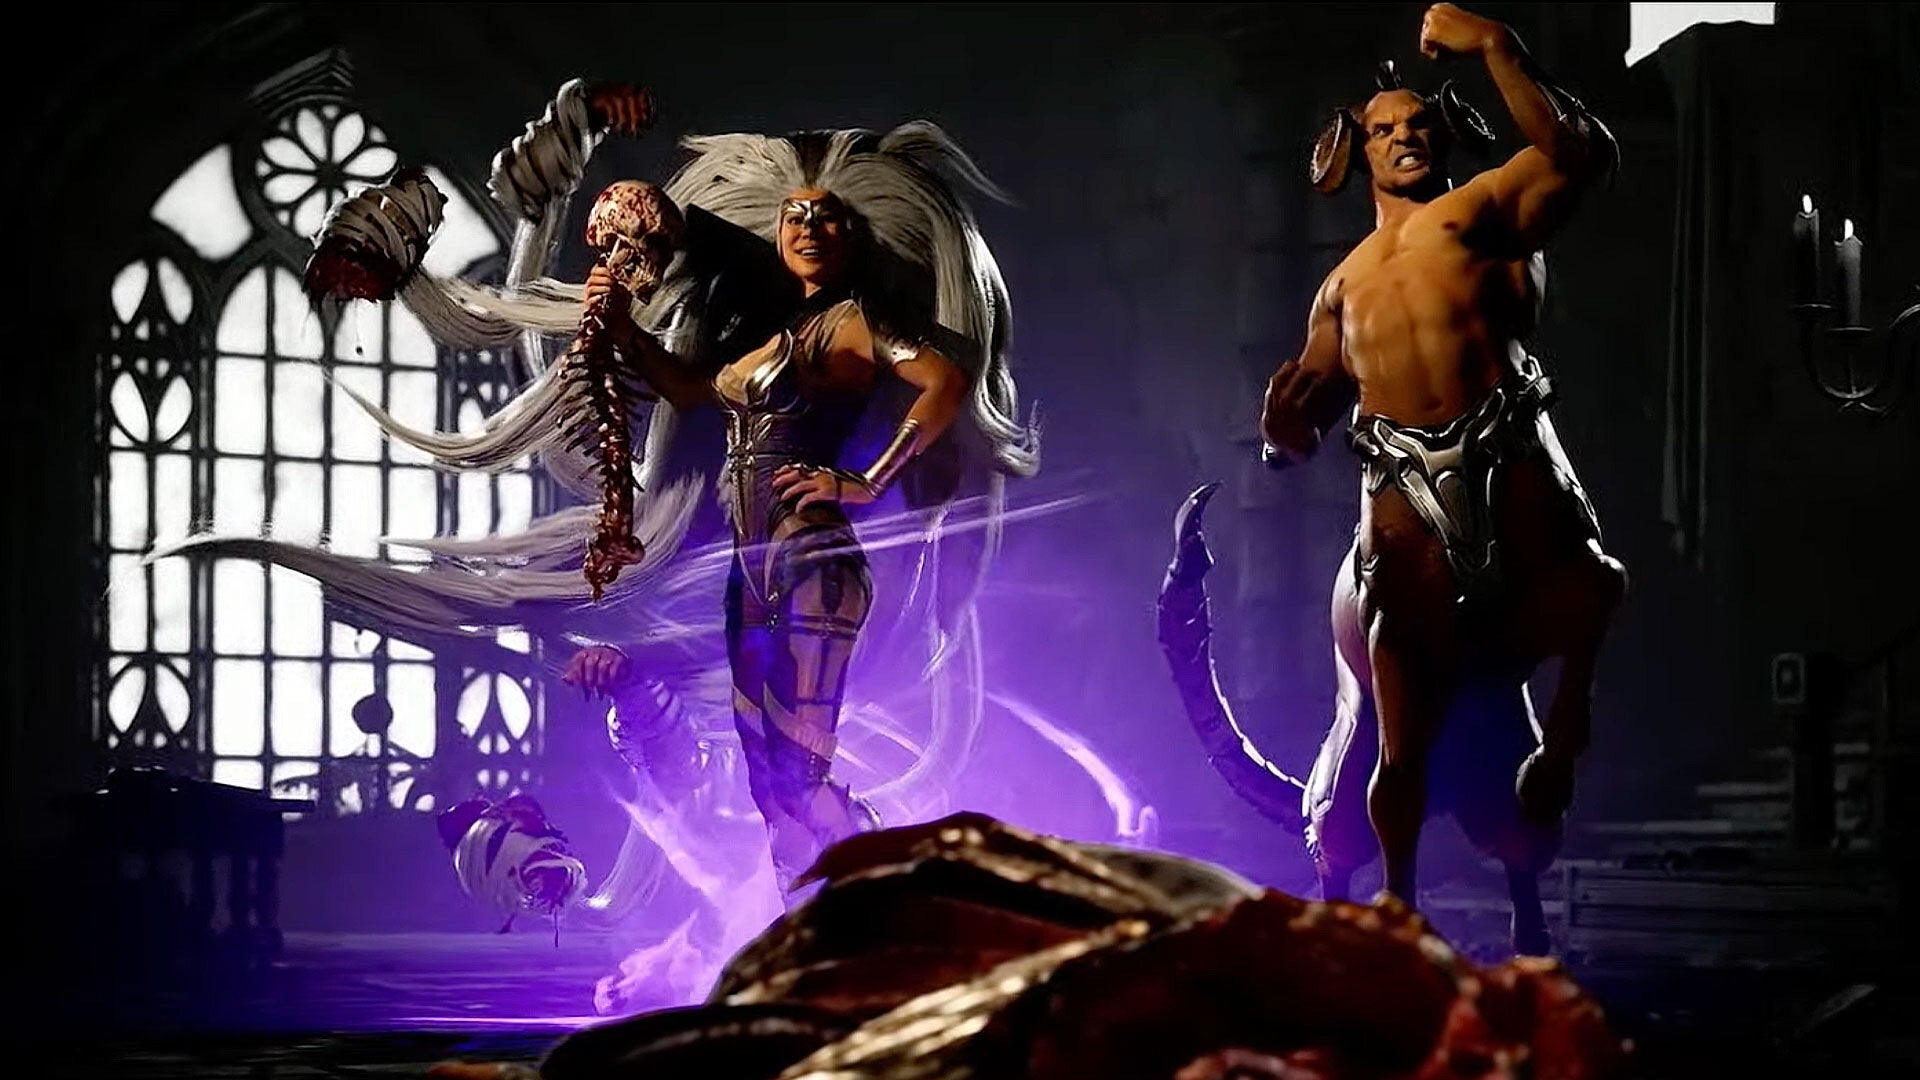 Novo trailer de Mortal Kombat 1 revela os lutadores Reptile